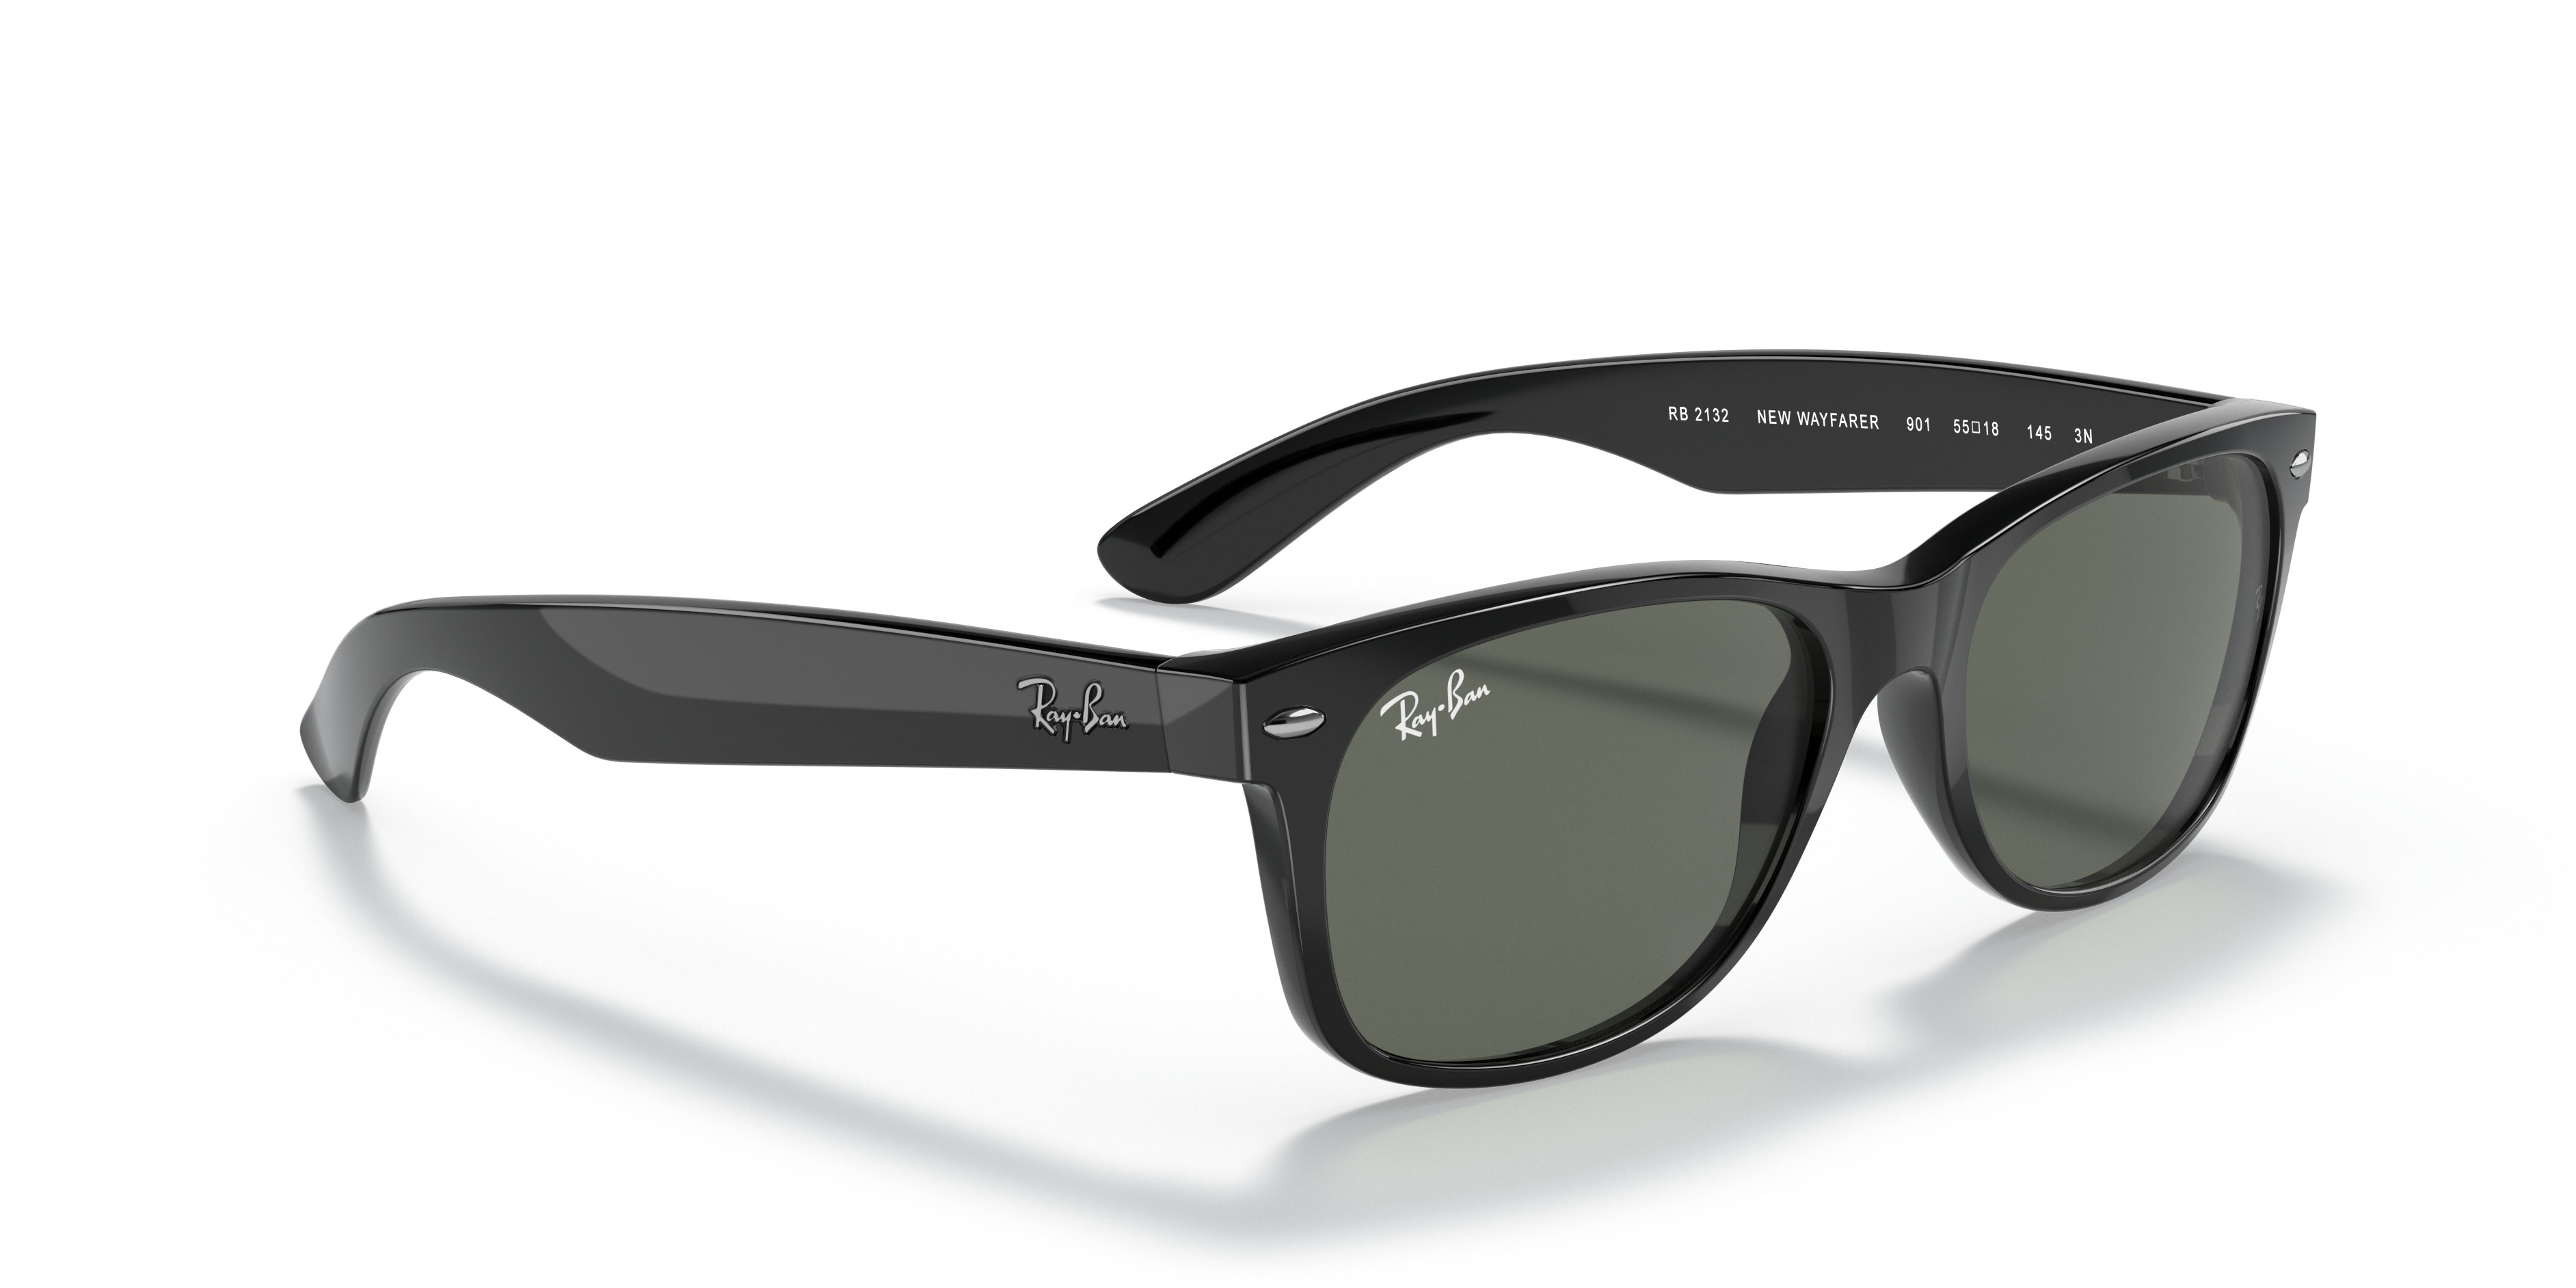 Ray-Ban Rb2132 New Wayfarer 52mm Sunglasses in Black Womens Sunglasses Ray-Ban Sunglasses 